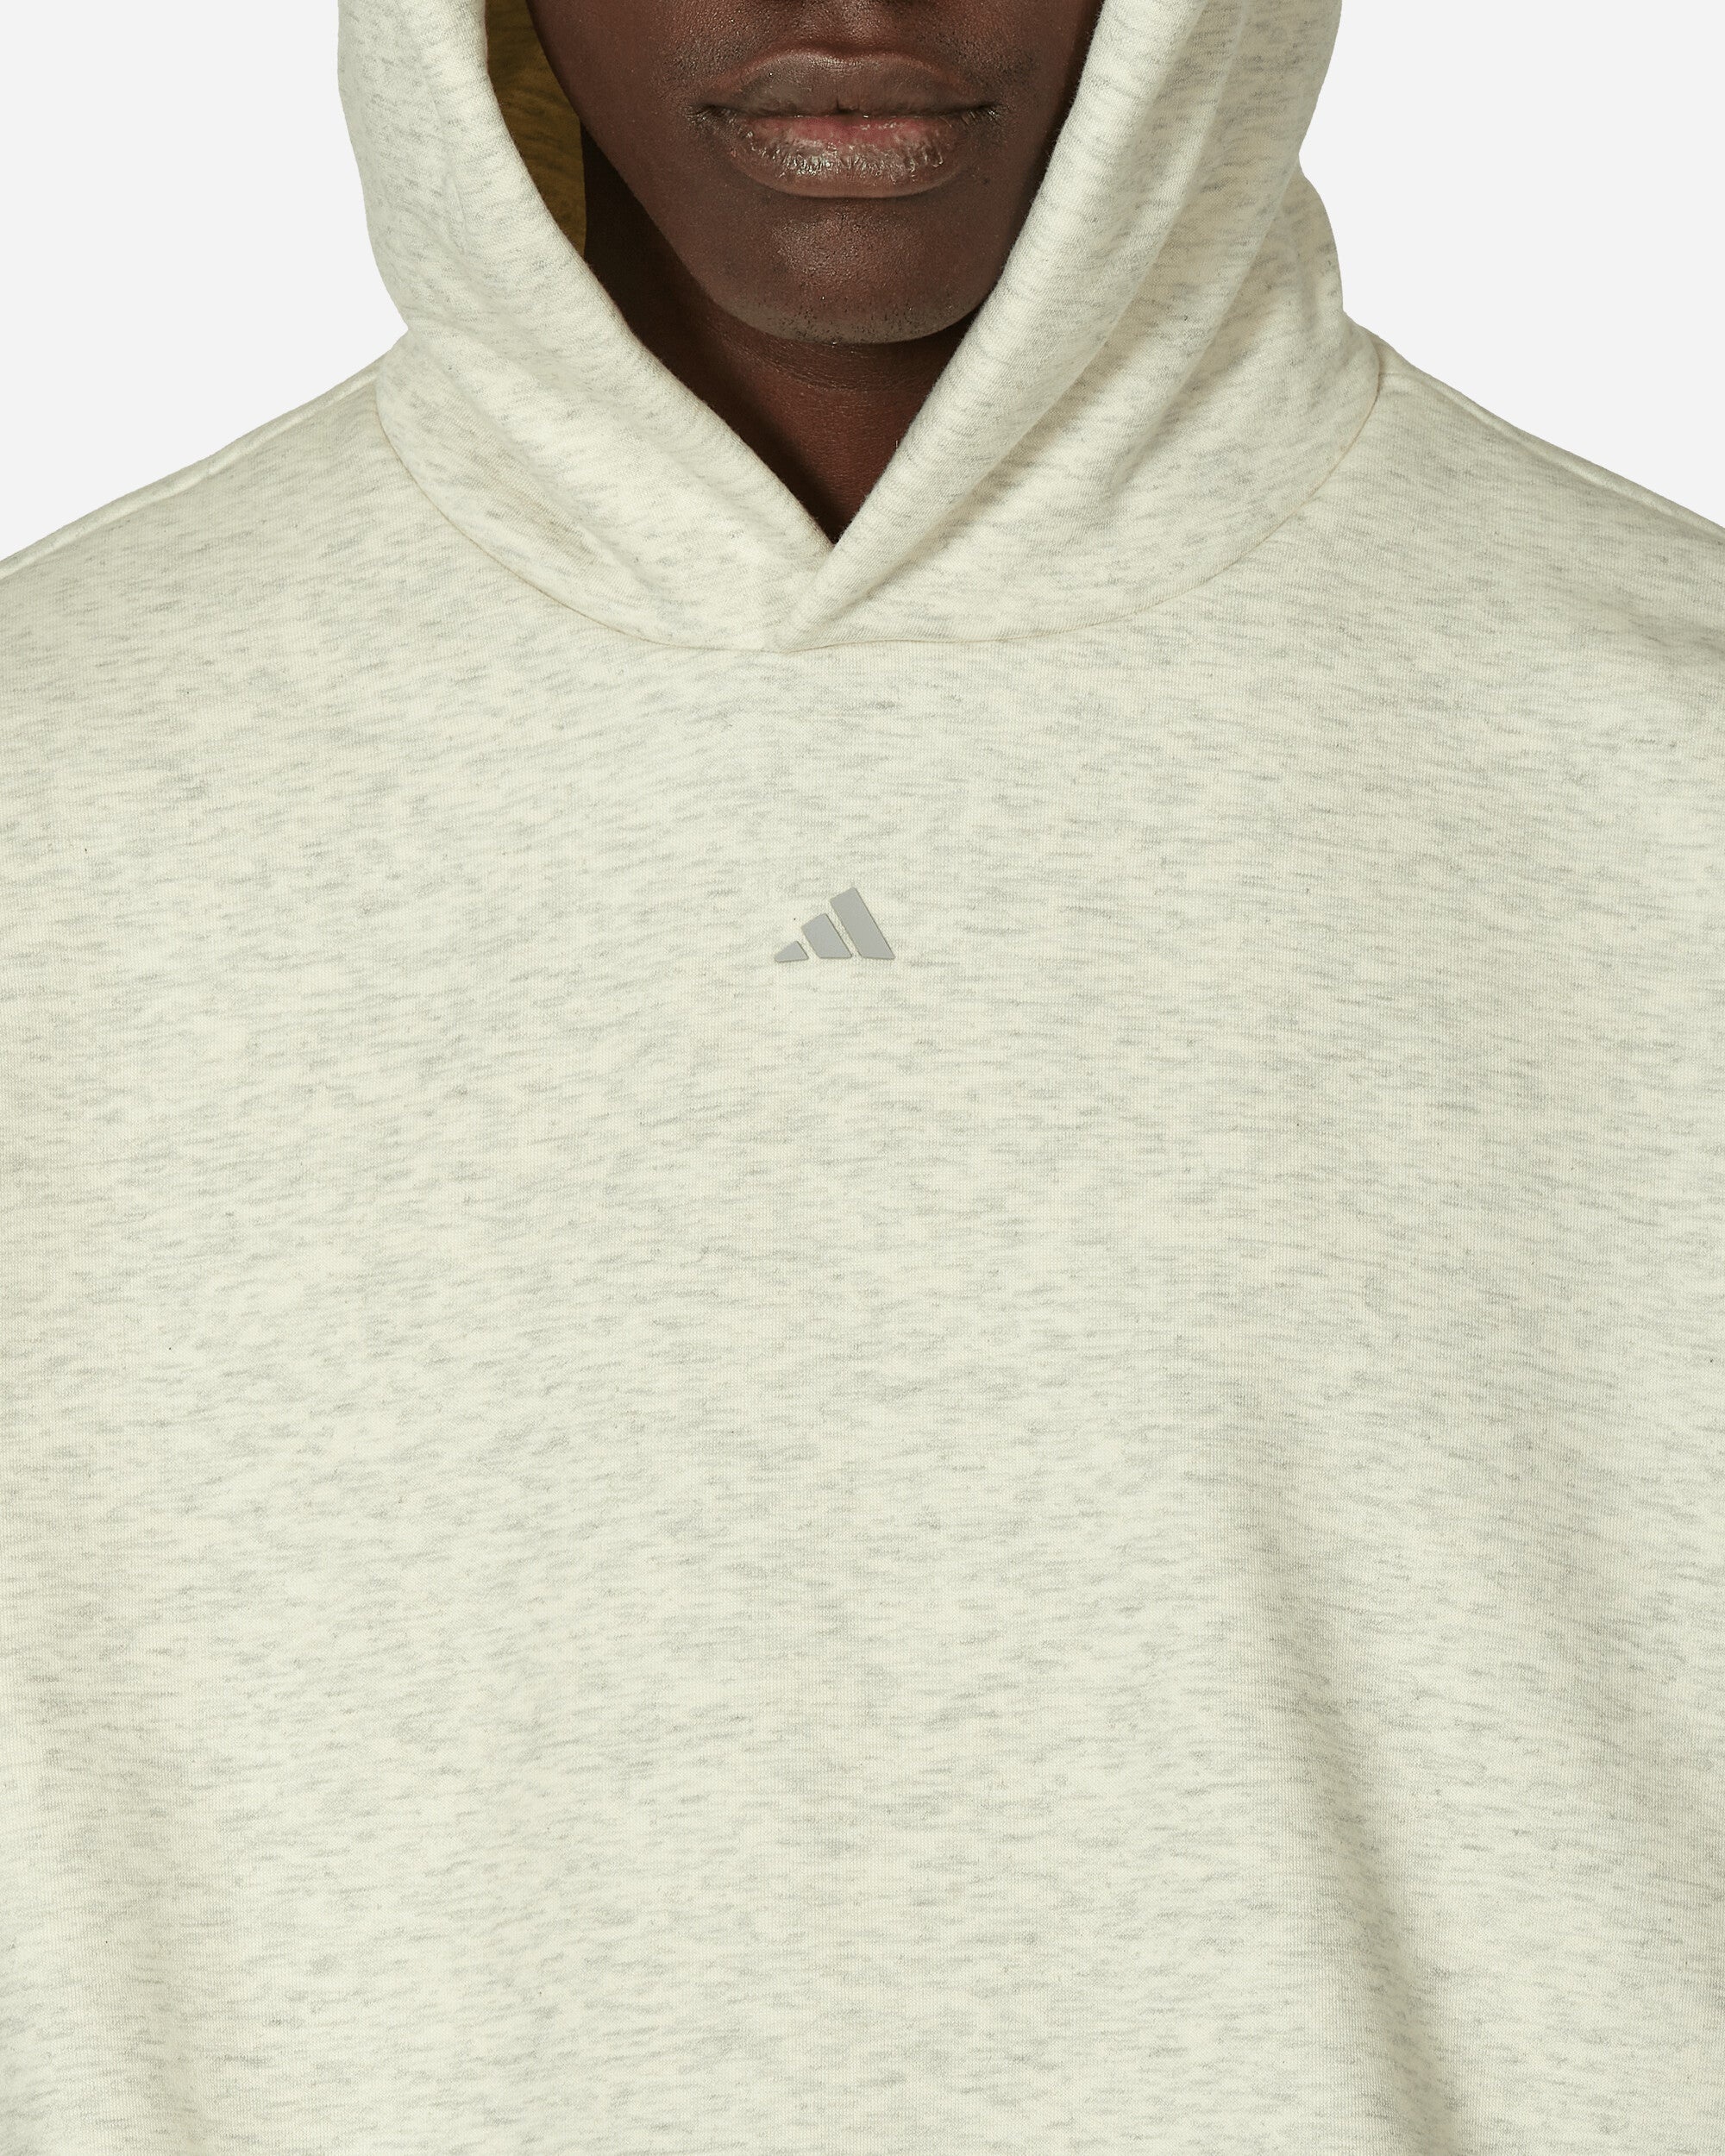 Basketball Hooded Sweatshirt Cream White - 5